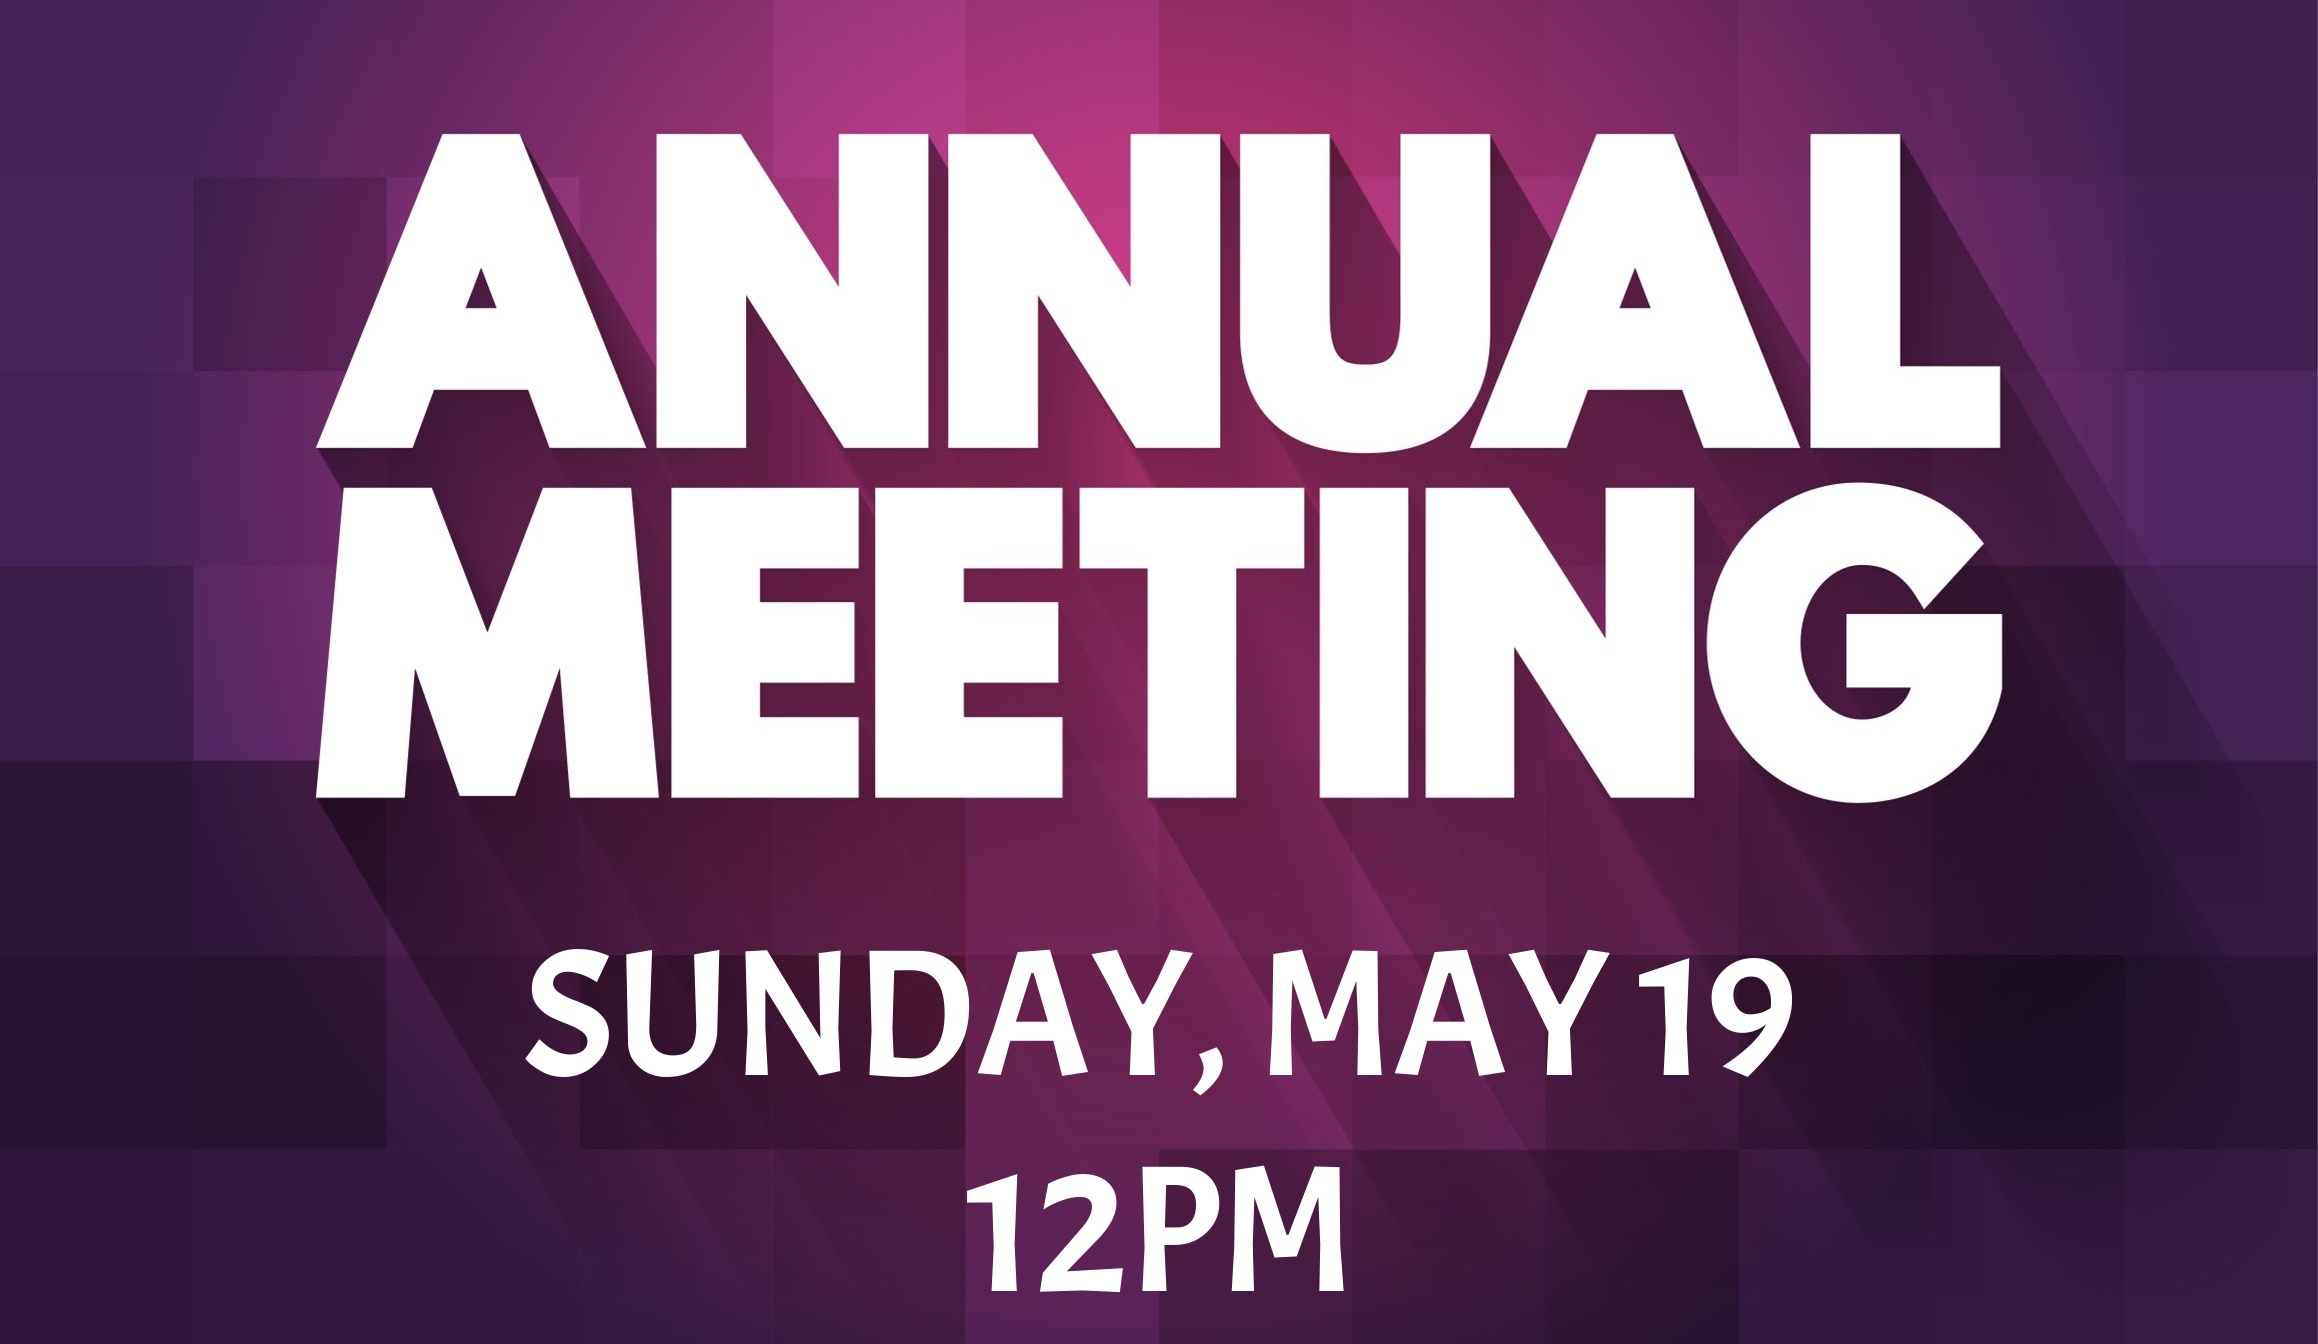 Annual Meeting - Sunday, May 19 at 12pm